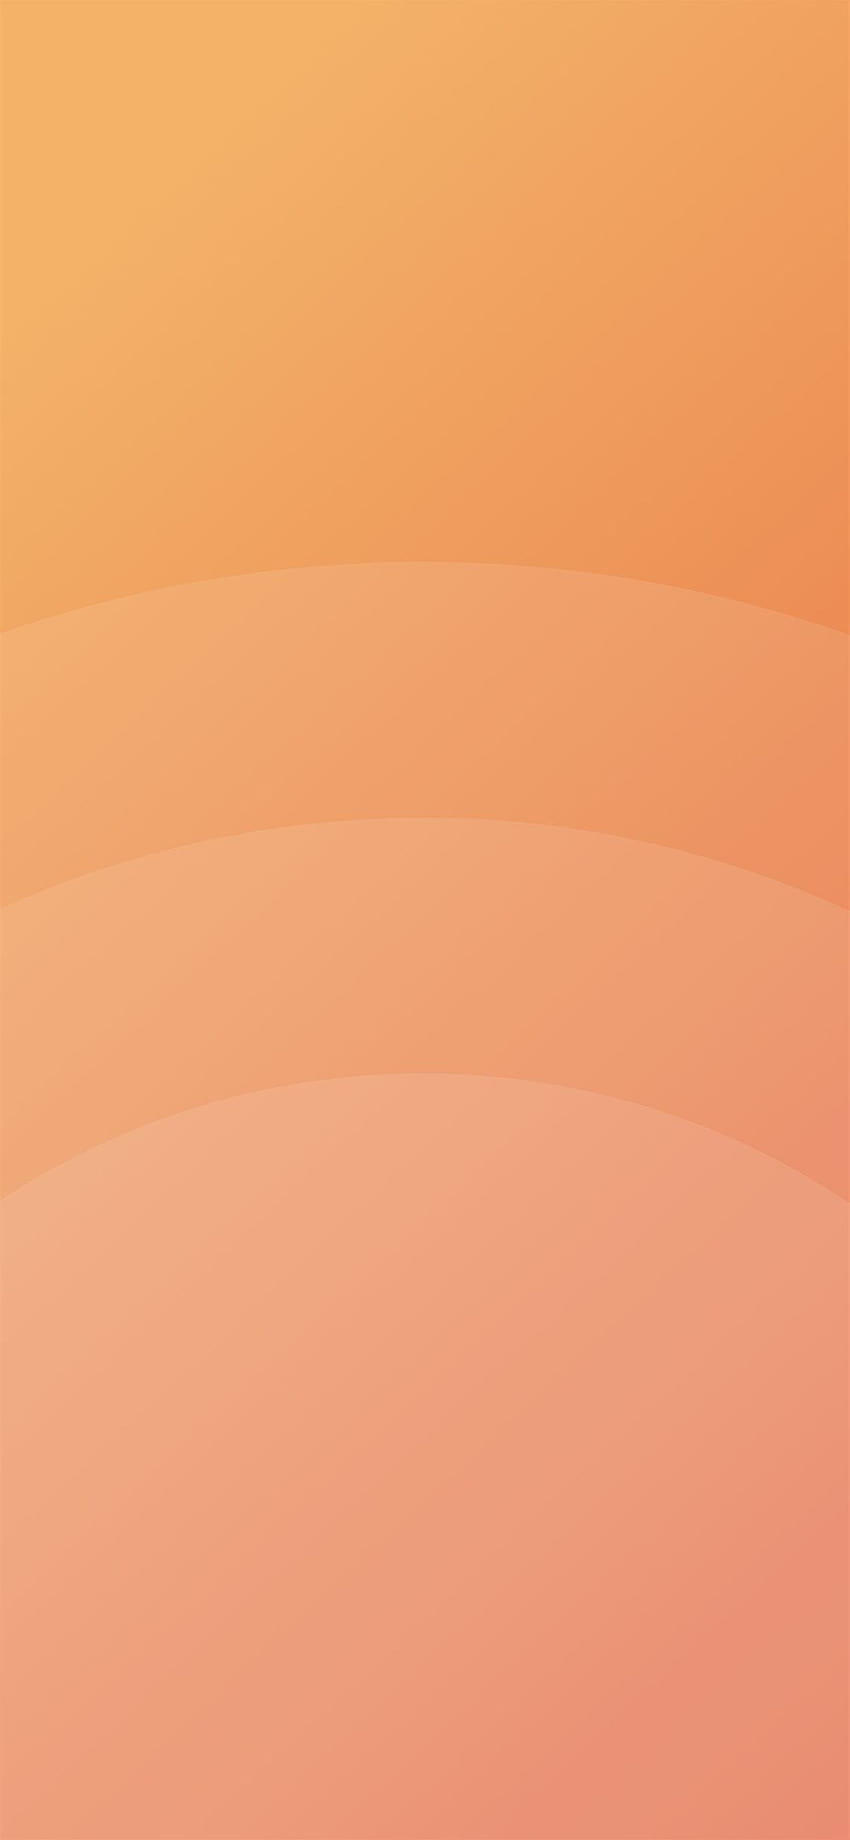 Círculo naranja simple patrón mínimo s iPhone X, naranja minimalista fondo de pantalla del teléfono